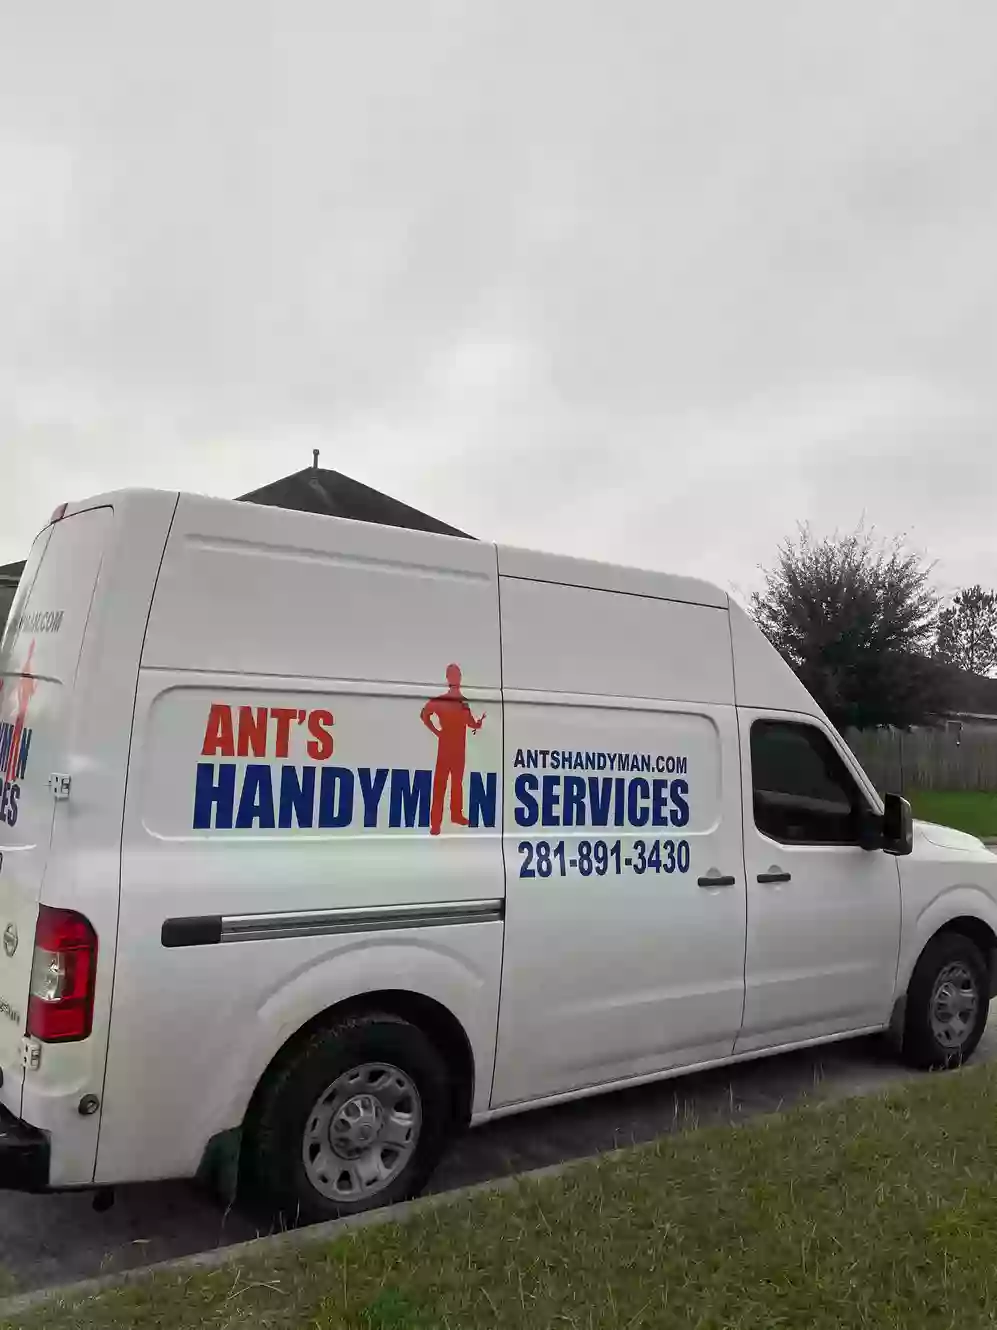 Ant's Handyman Services